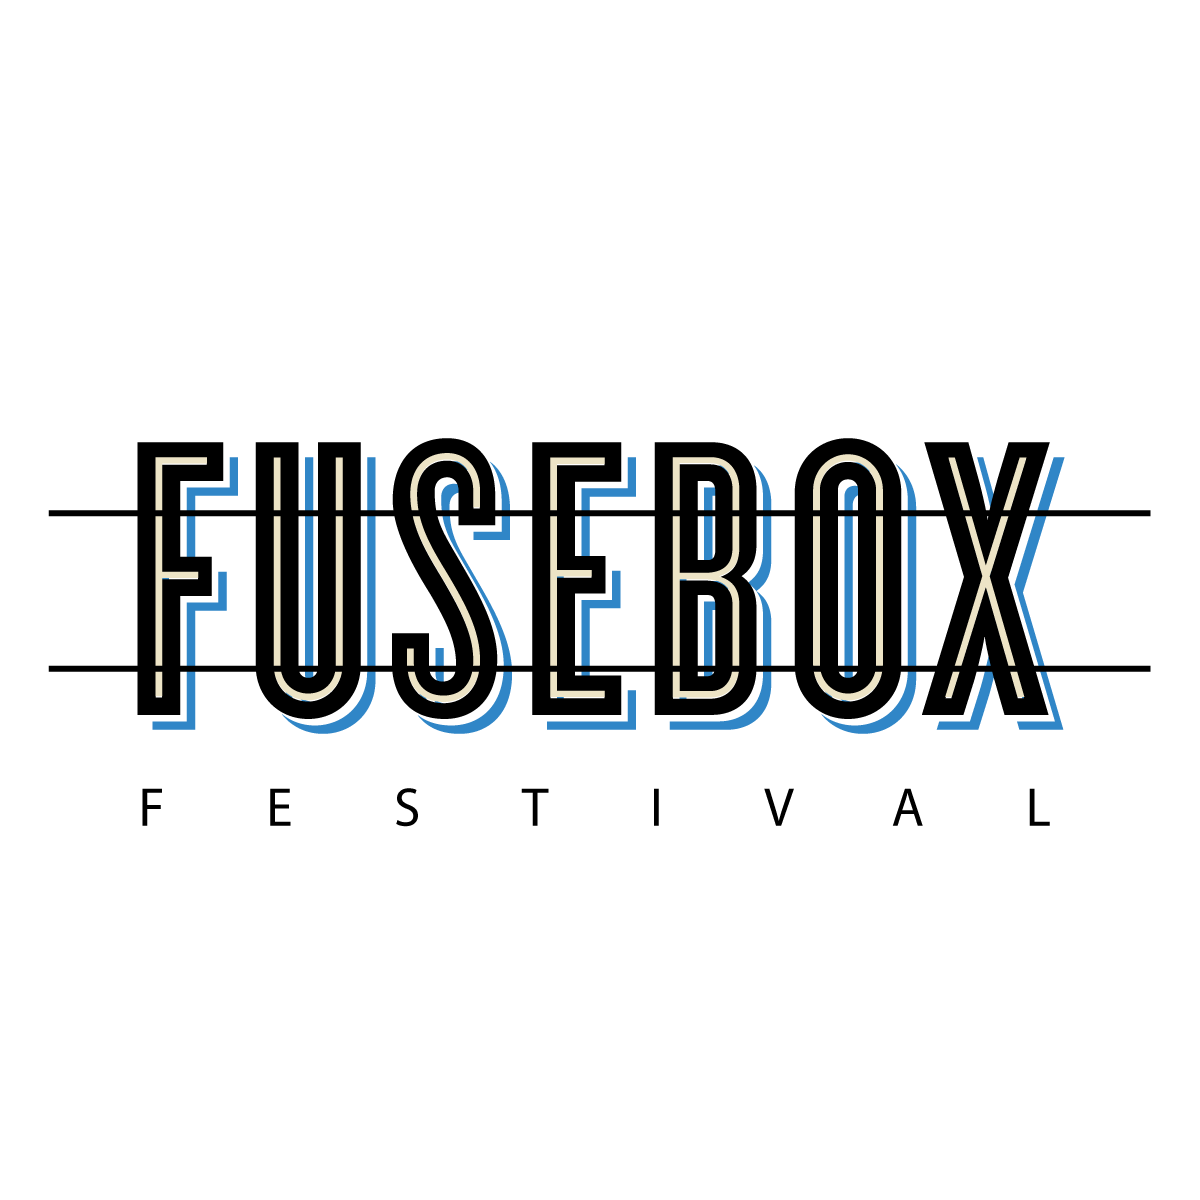 Fusebox Festival